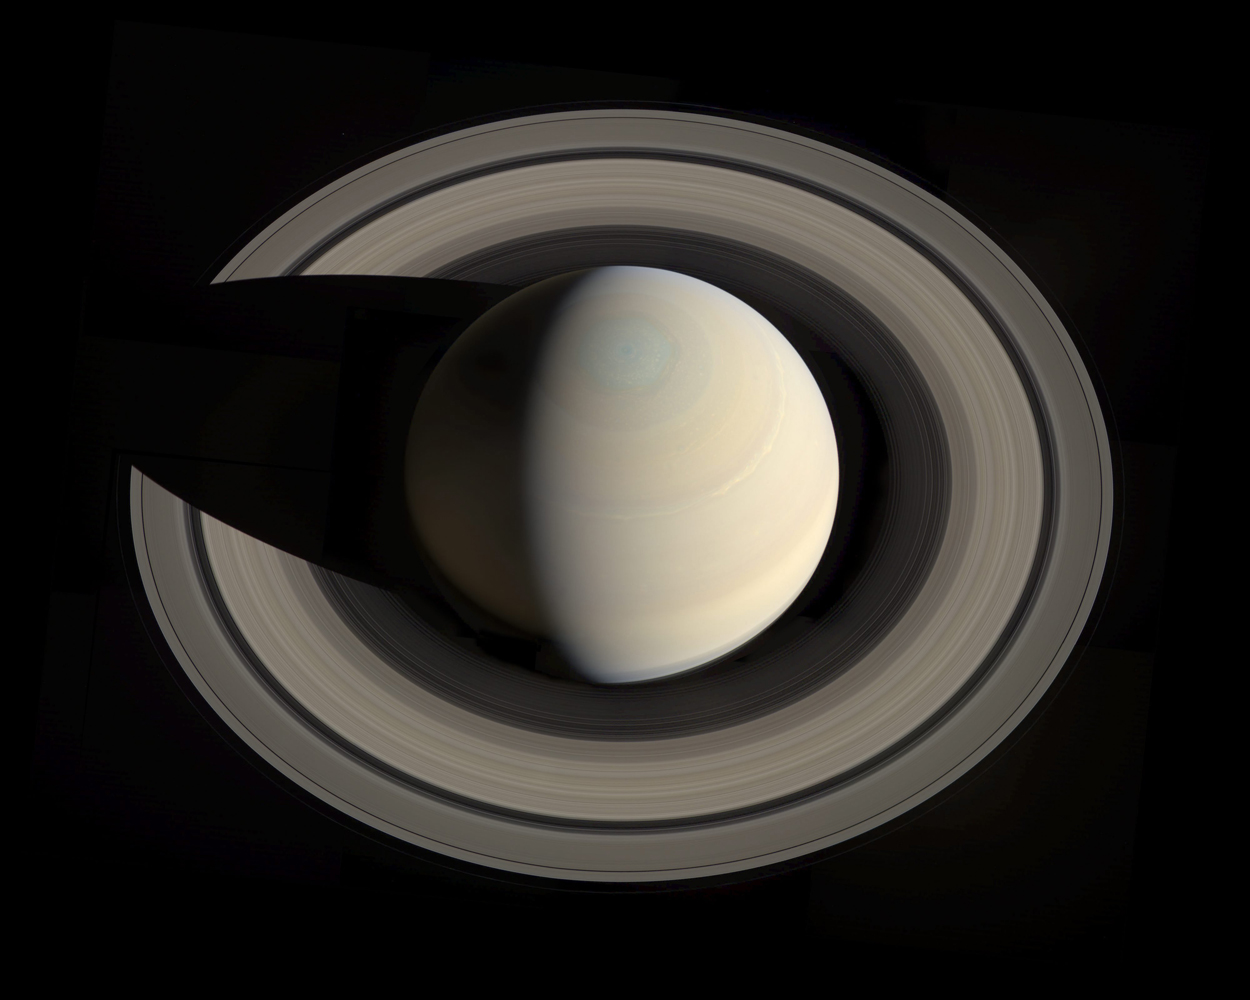 Mosaic Image of Saturn